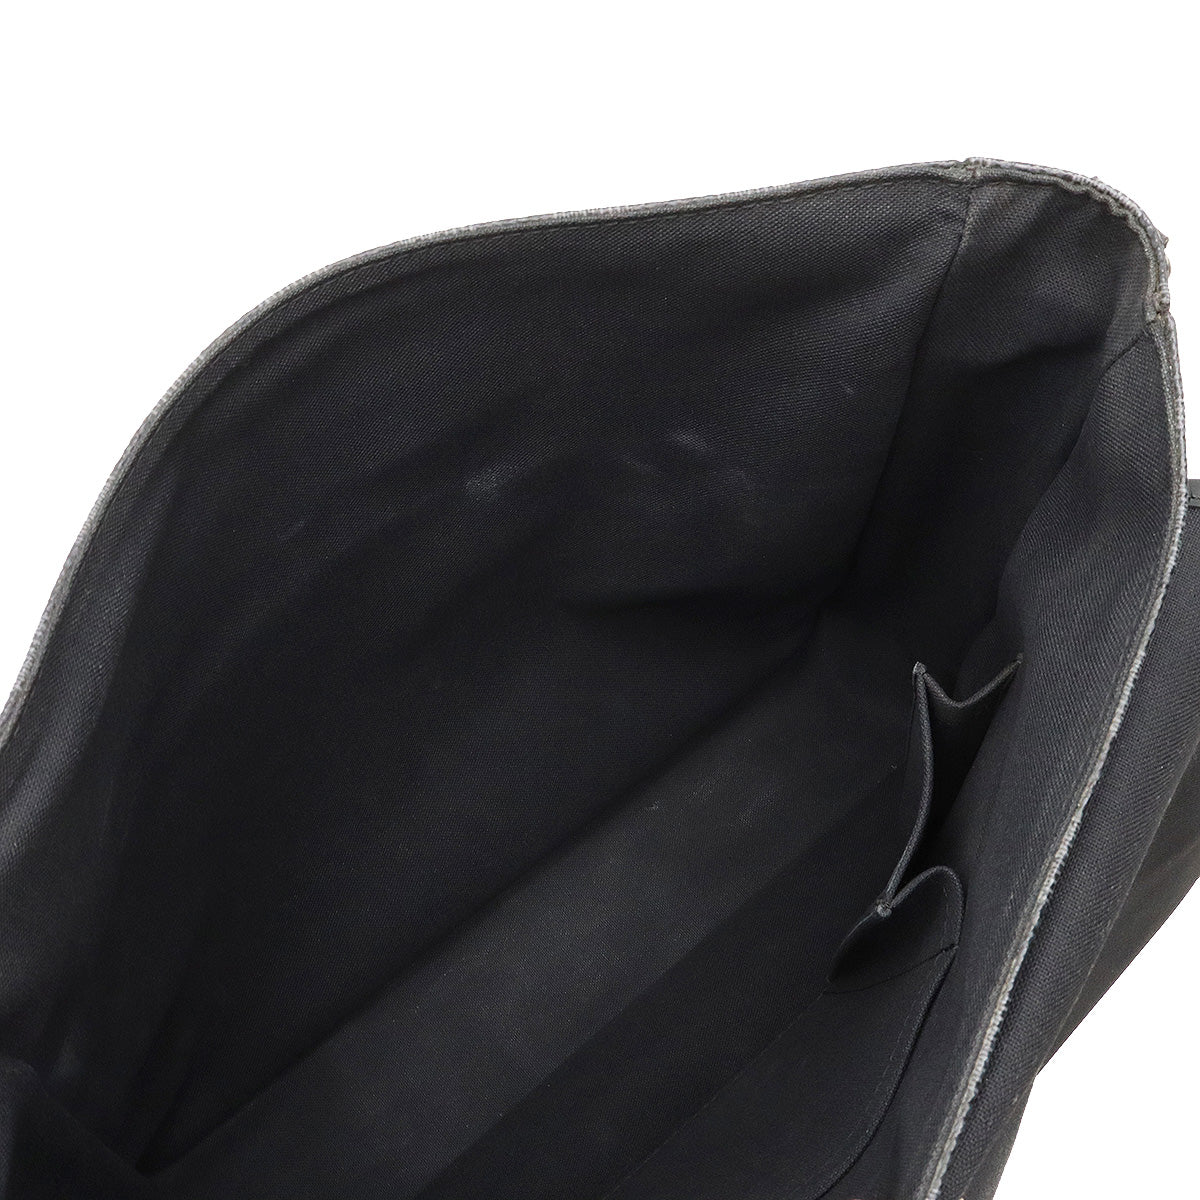 Louis Vuitton LV SHW Daniel MM Shoulder Bag N58029 Damier Graphite Black